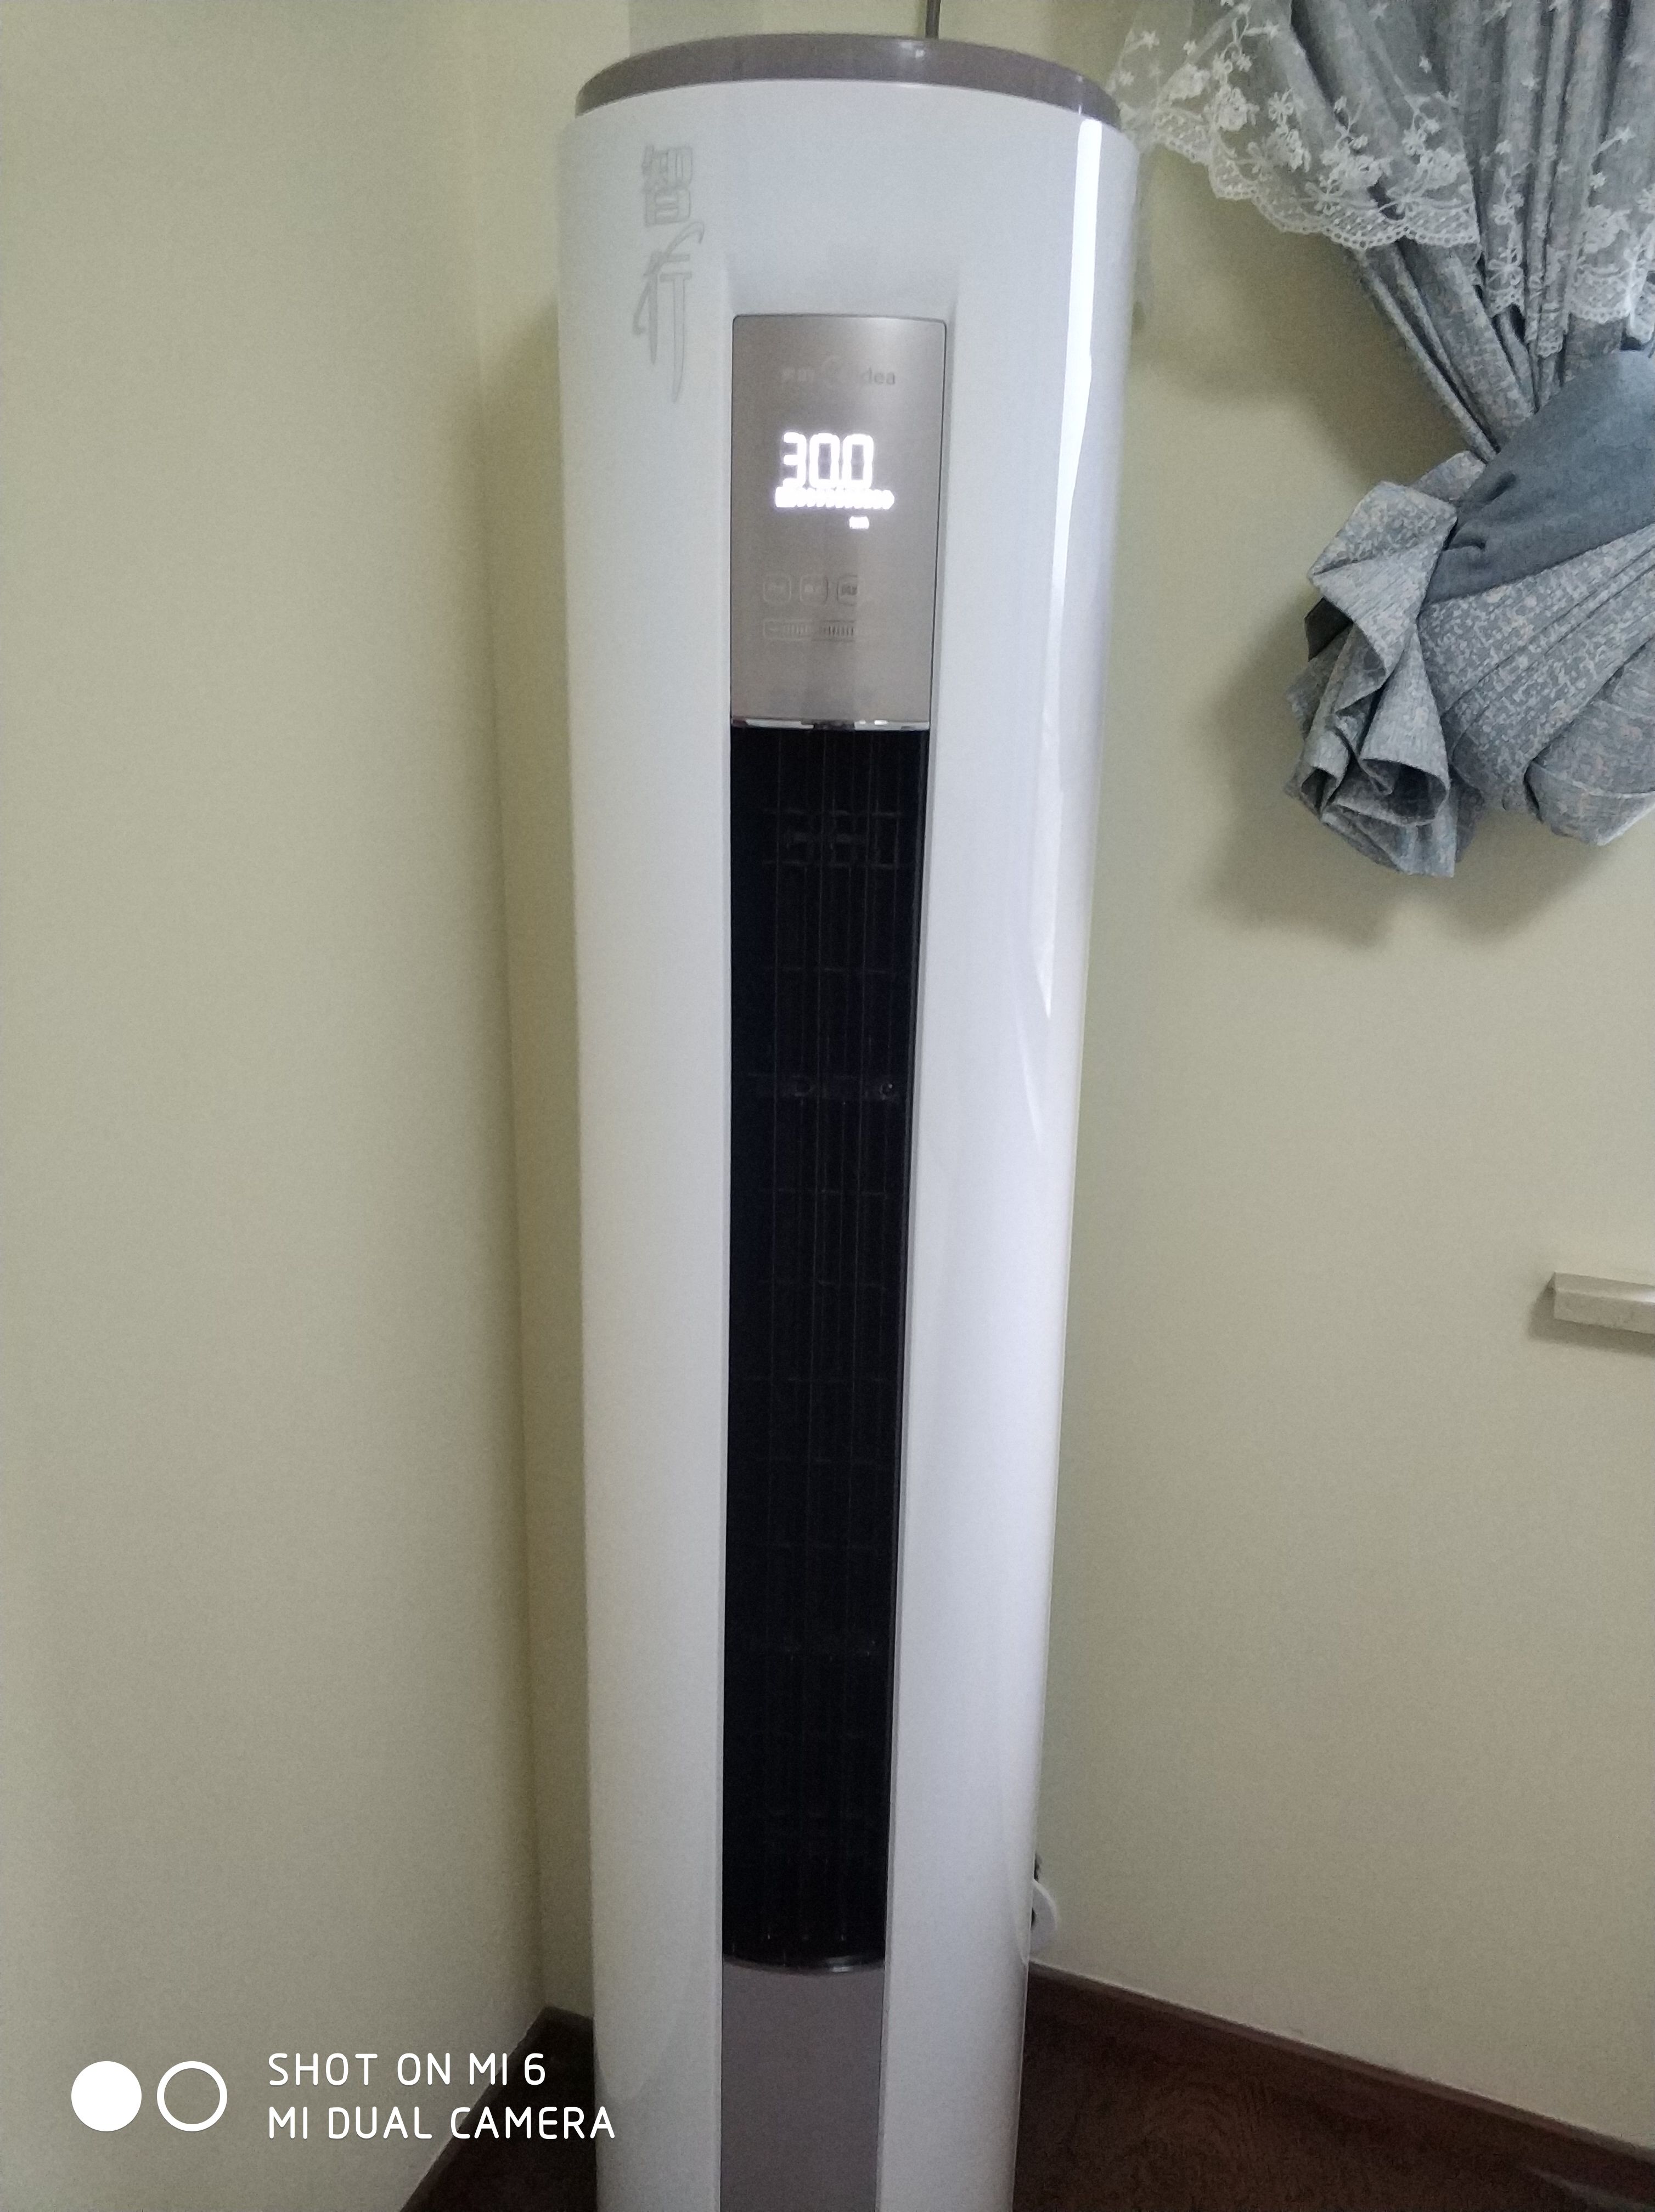 LG立柜式冷暖空调 LP-M7221A - 普象网